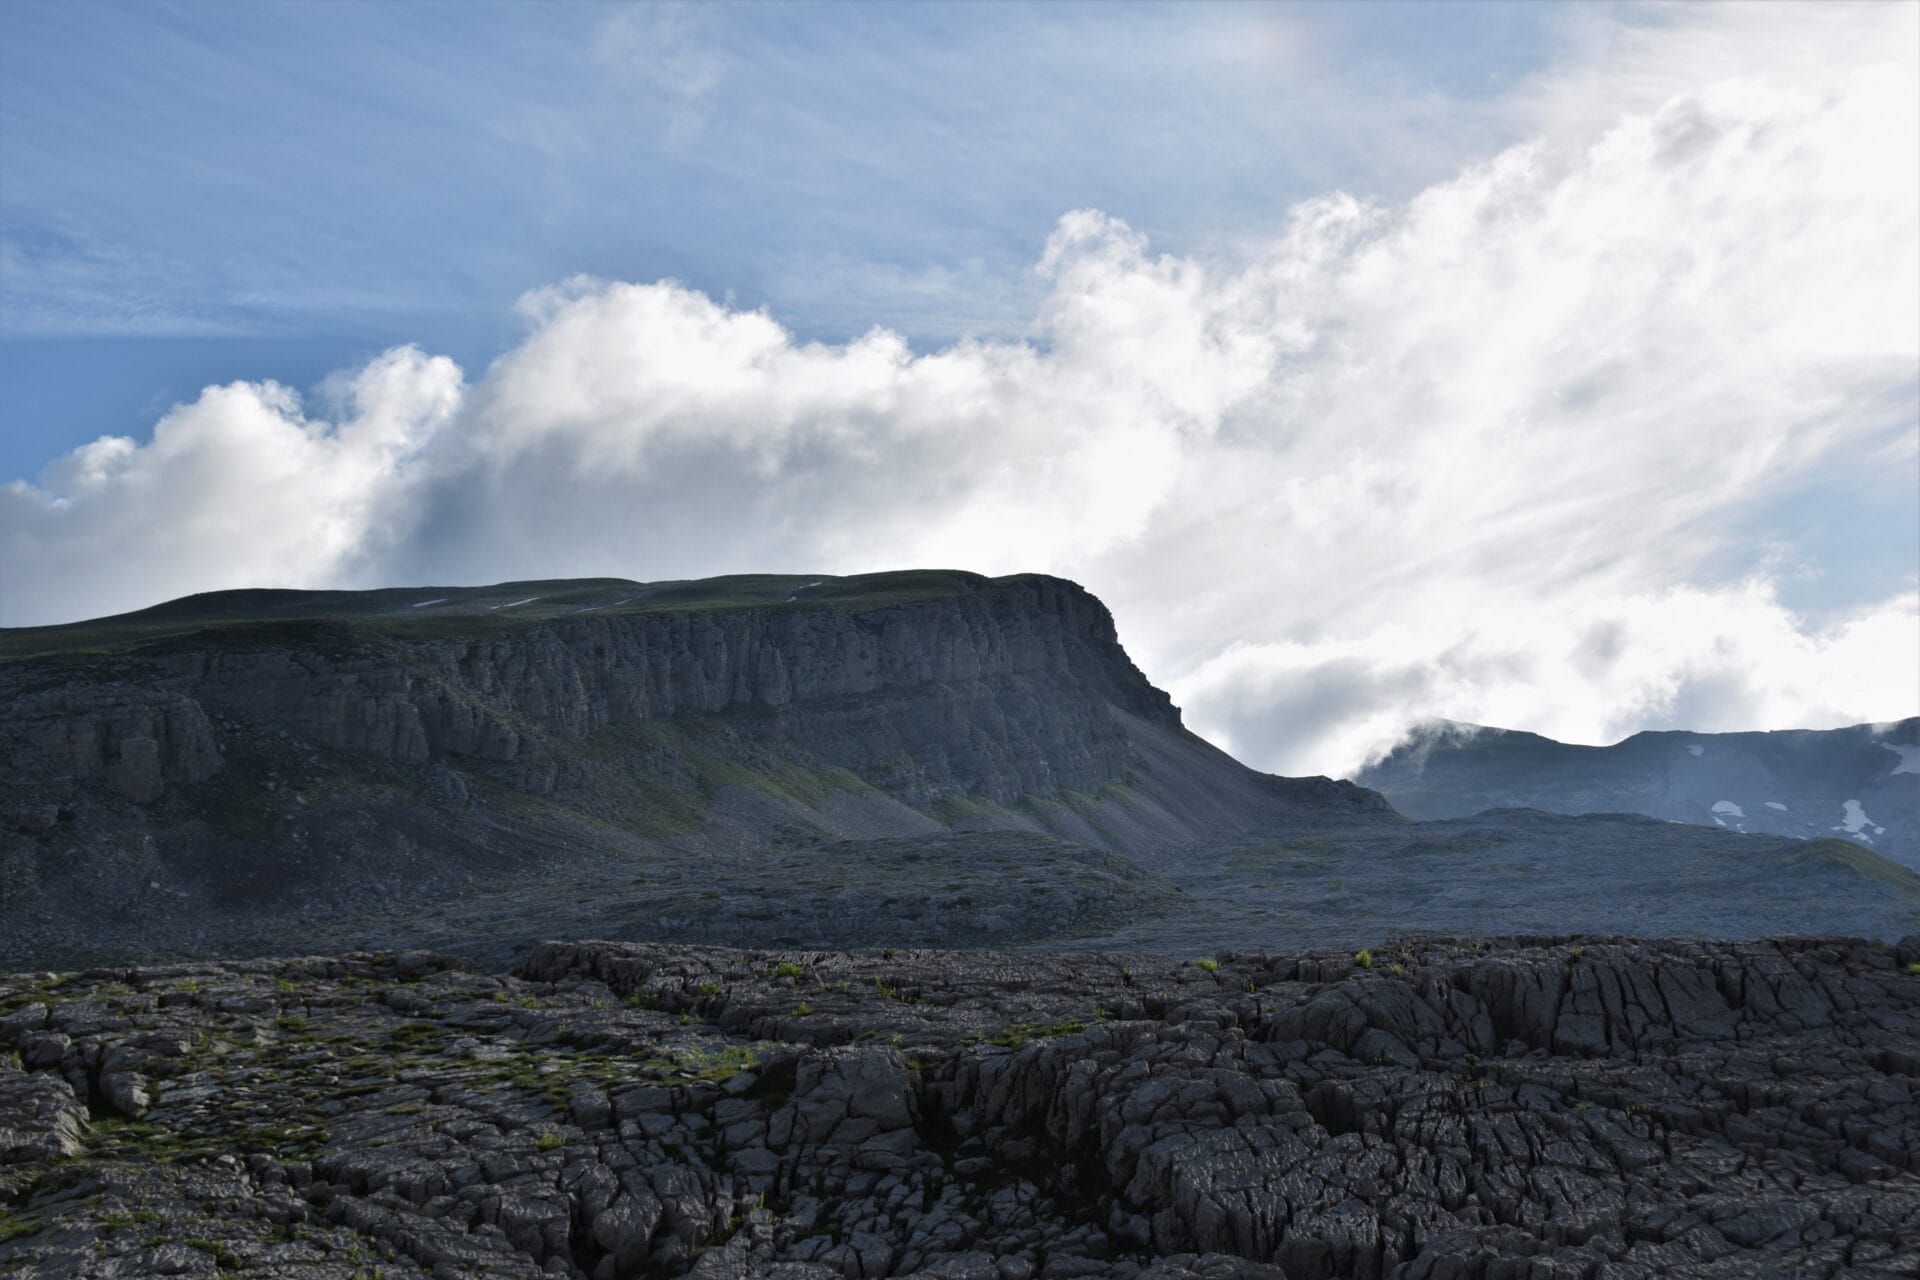 a slanted peak looms above a rocky mountain landscape